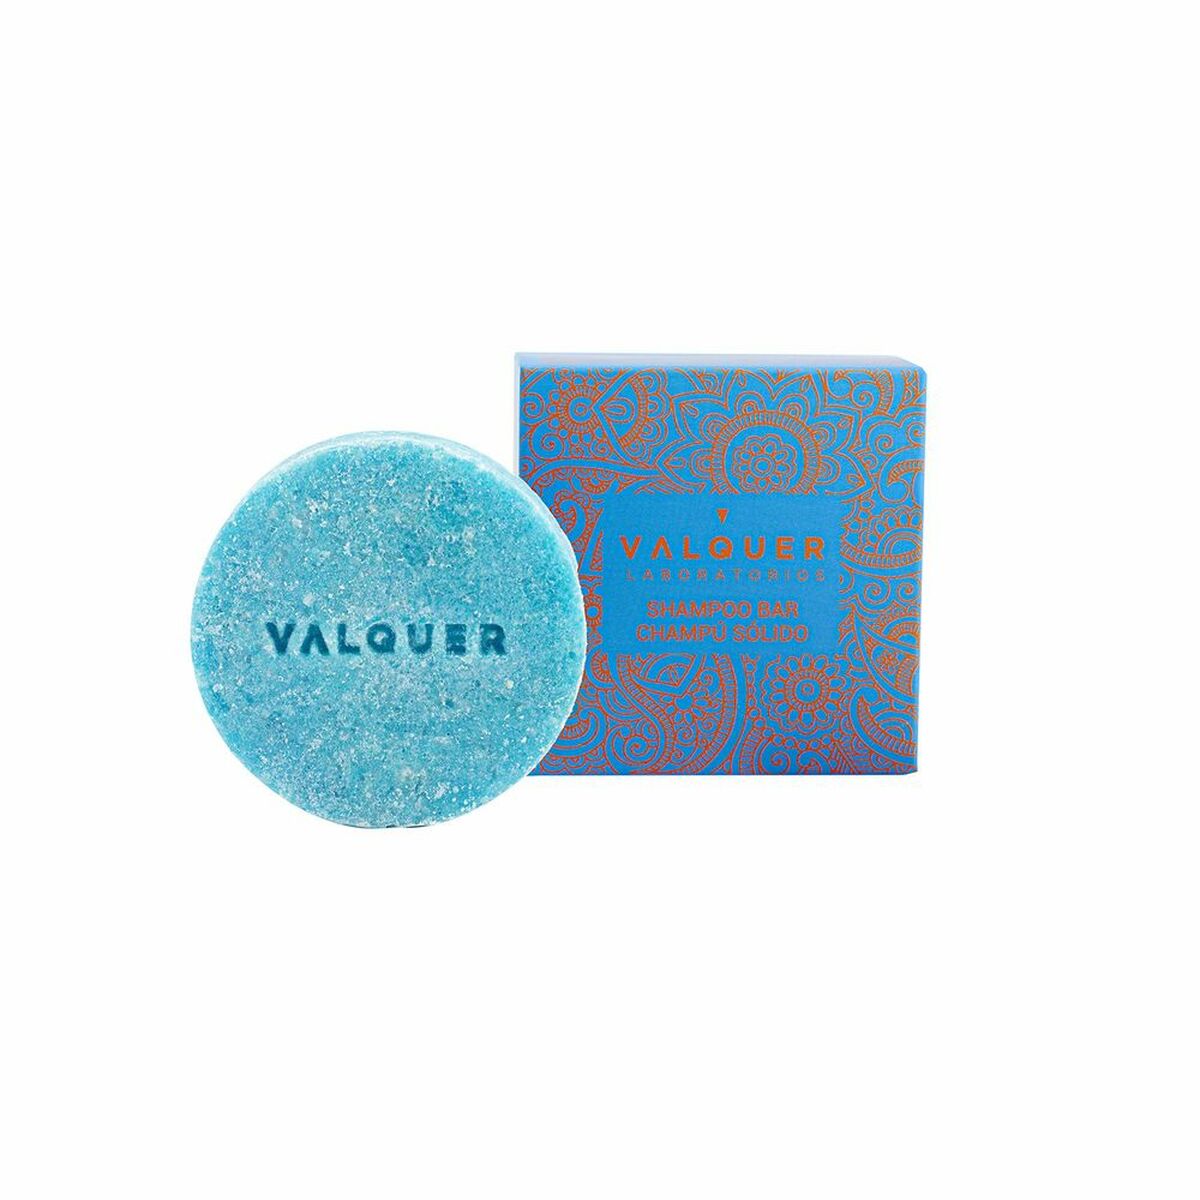 Șampon solid Sunrise Valquer (50 g)